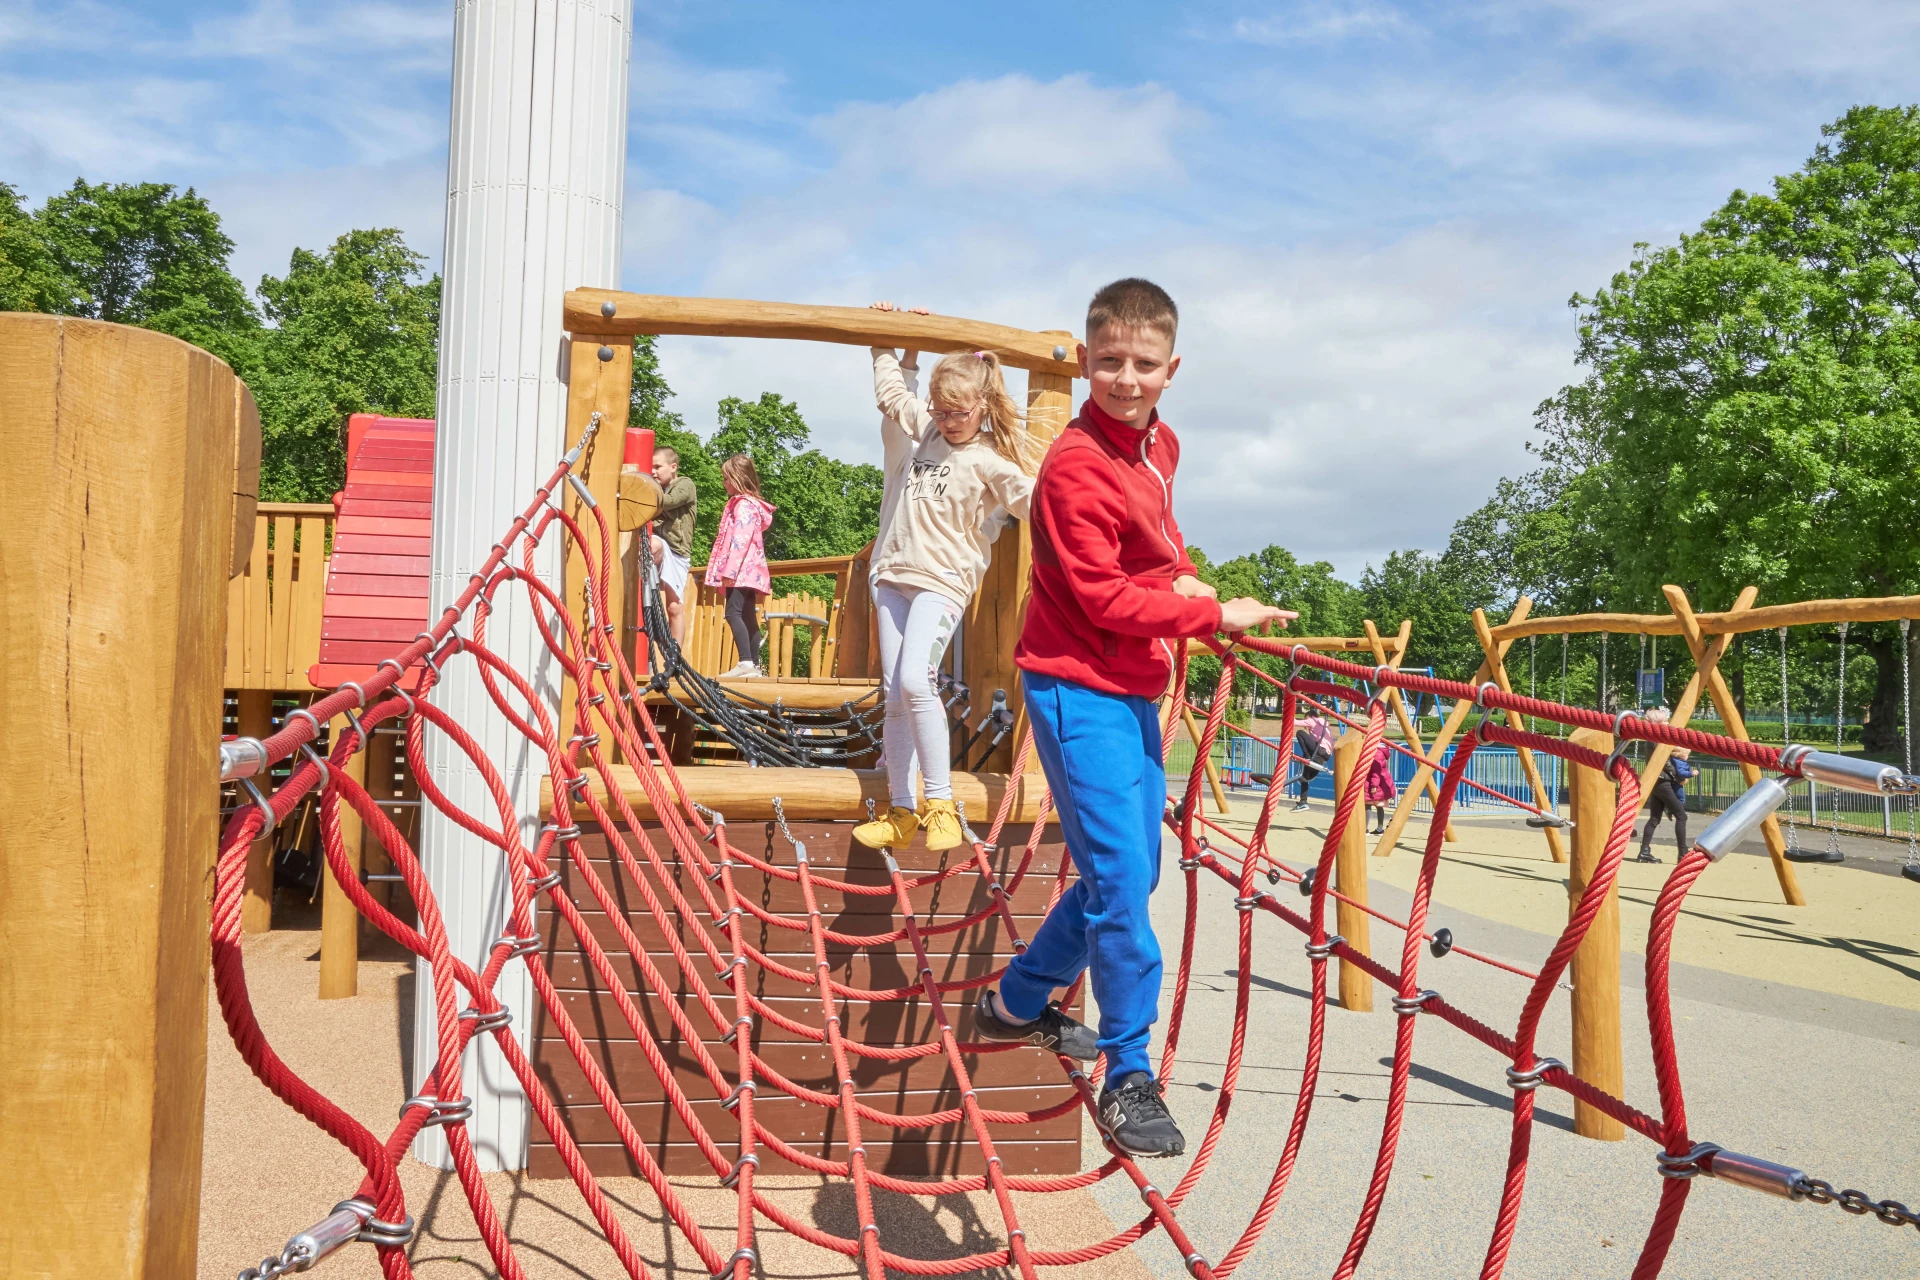 Zetland Park - Kids playing on ship